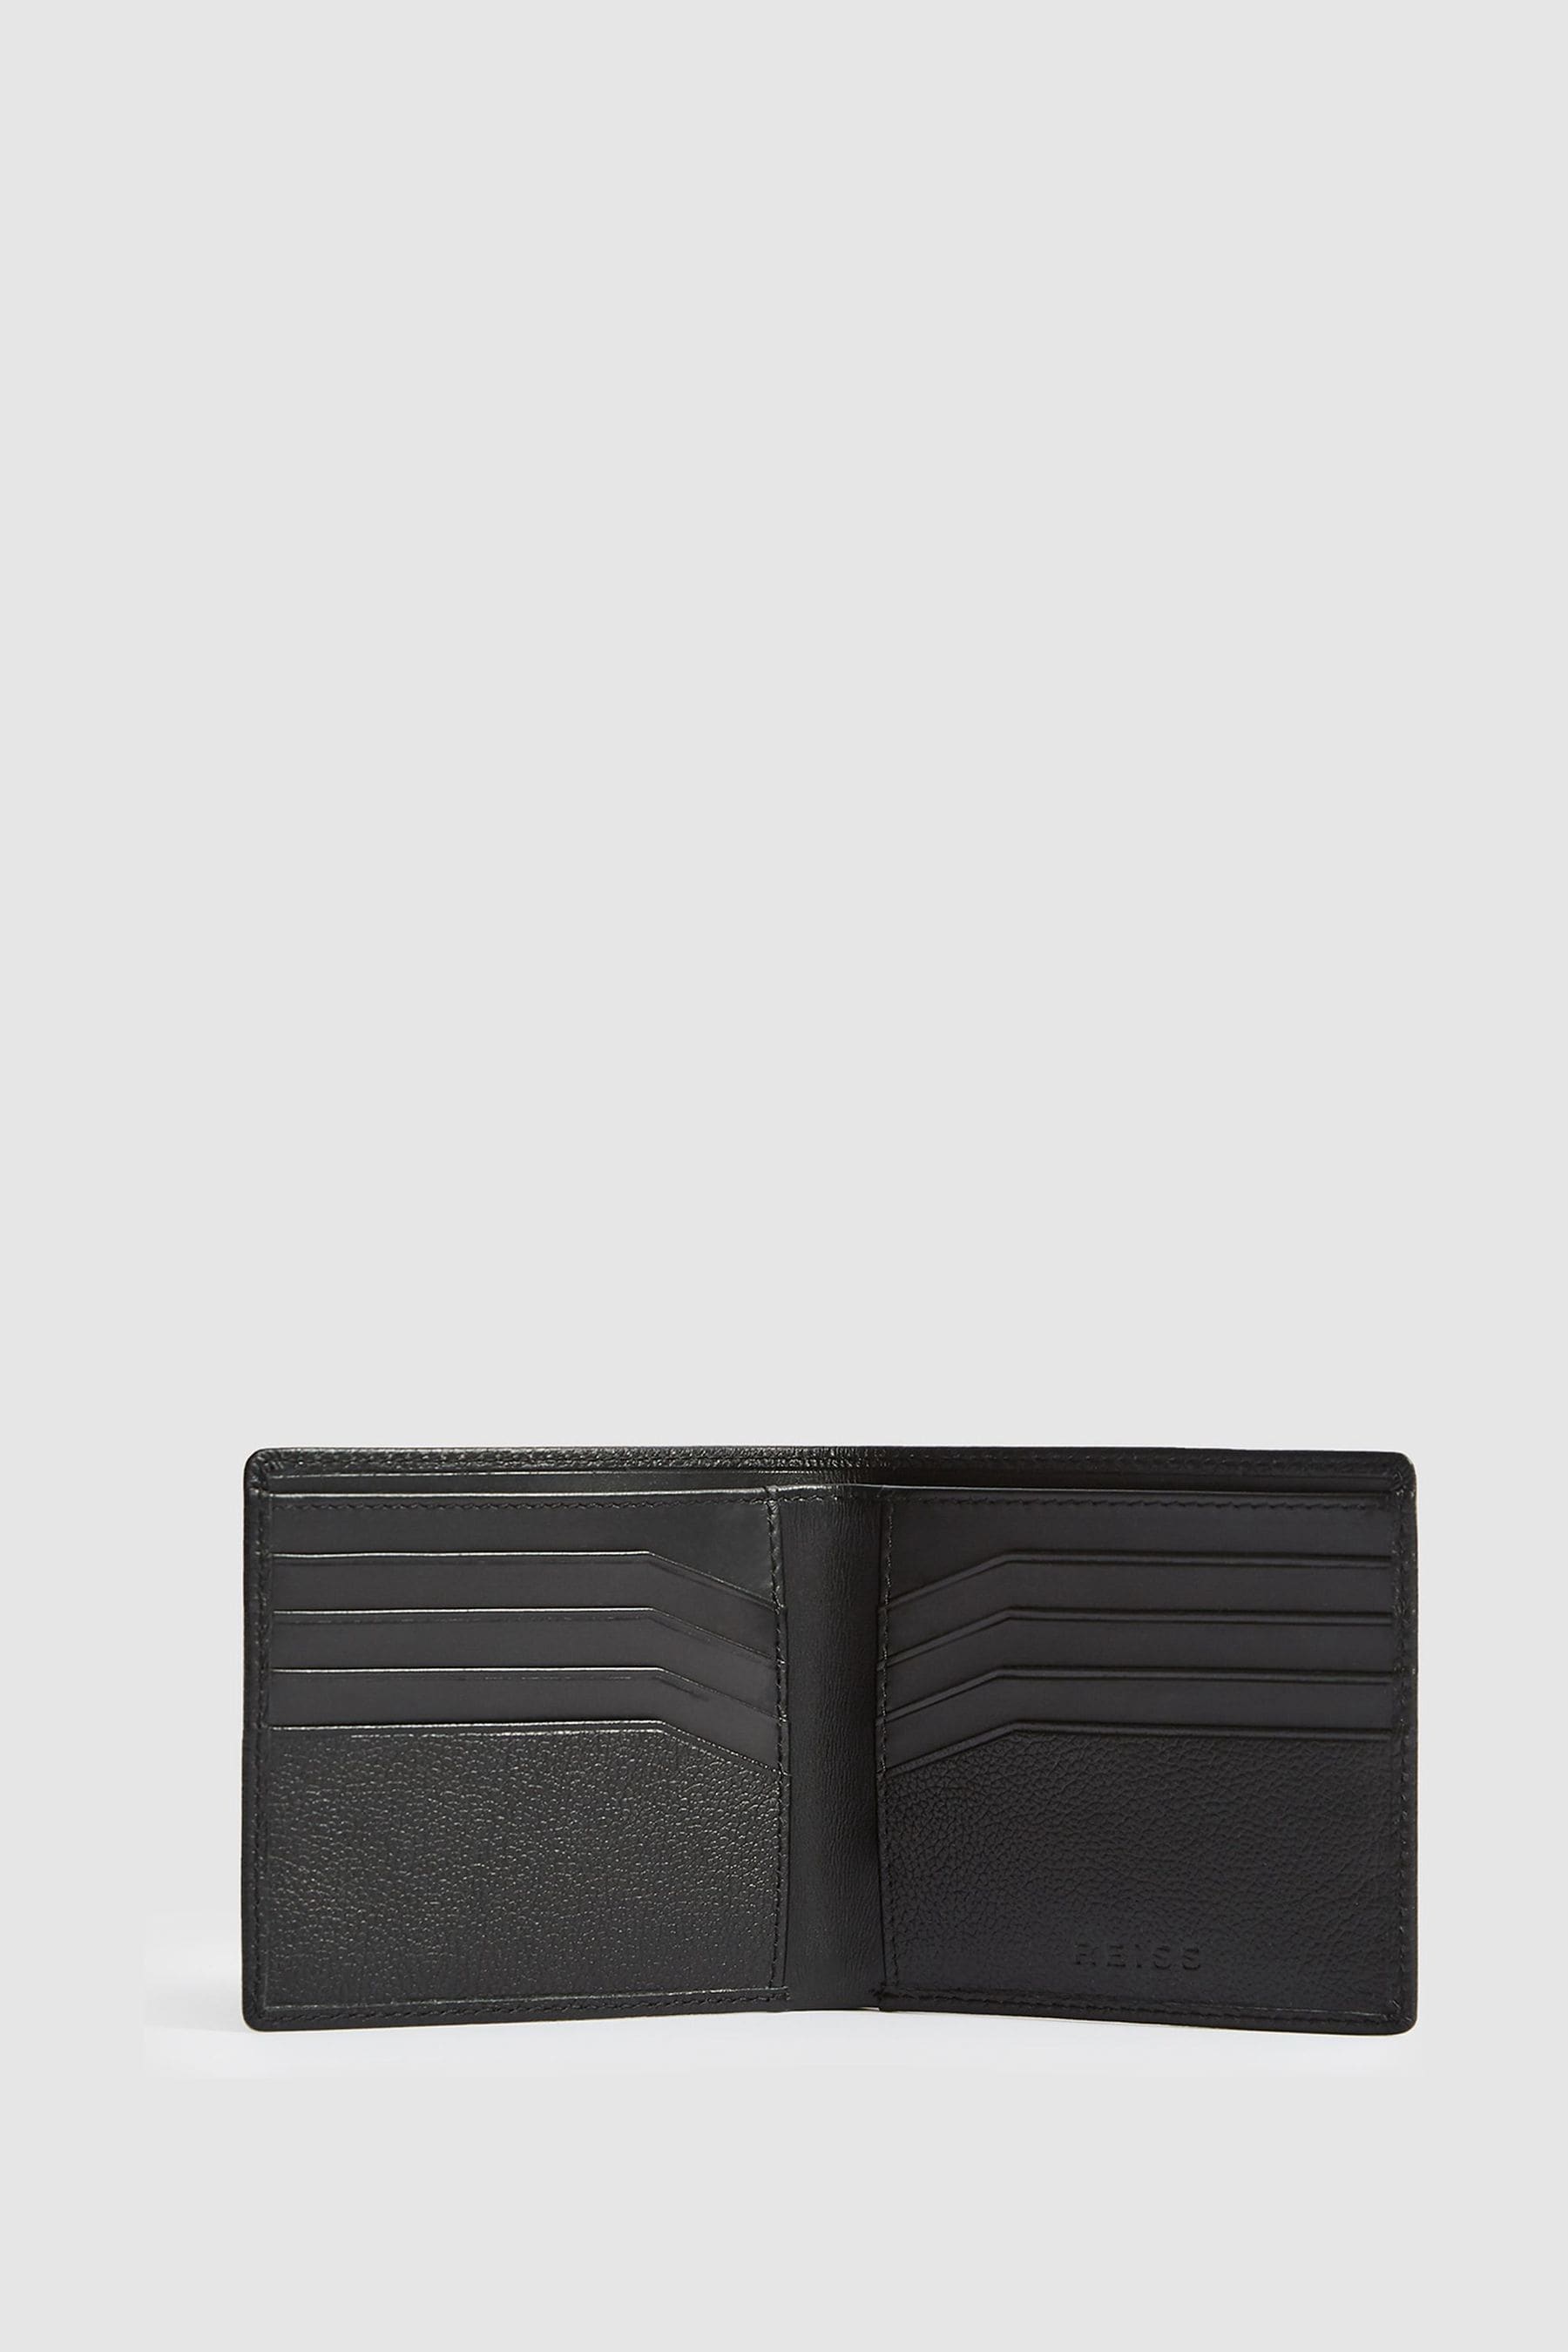 Cabot - Black Leather Wallet